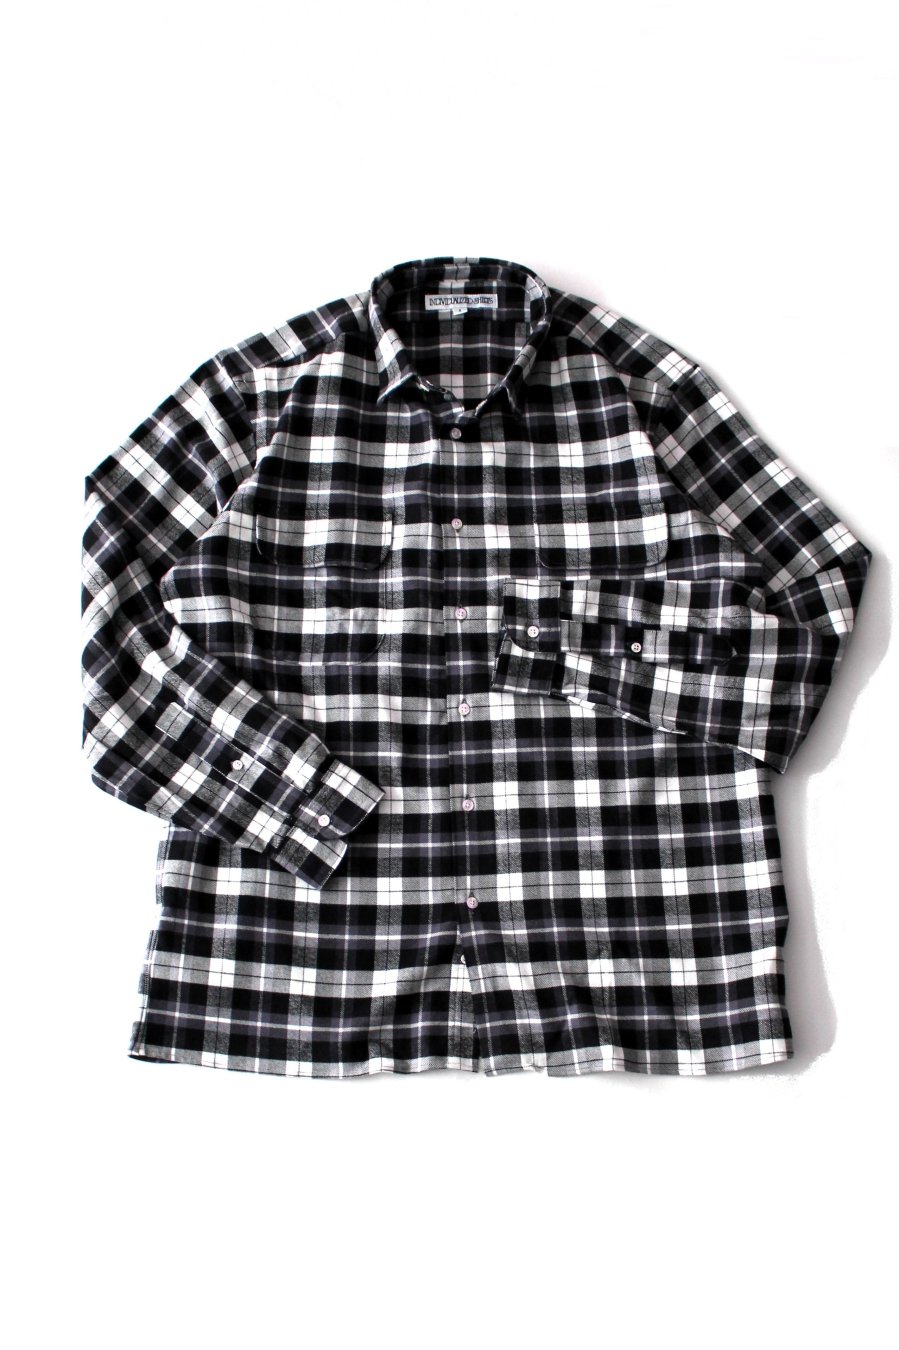 narifuri Bias cut heated flannel shirt冬に最適なヒートネルシャツです